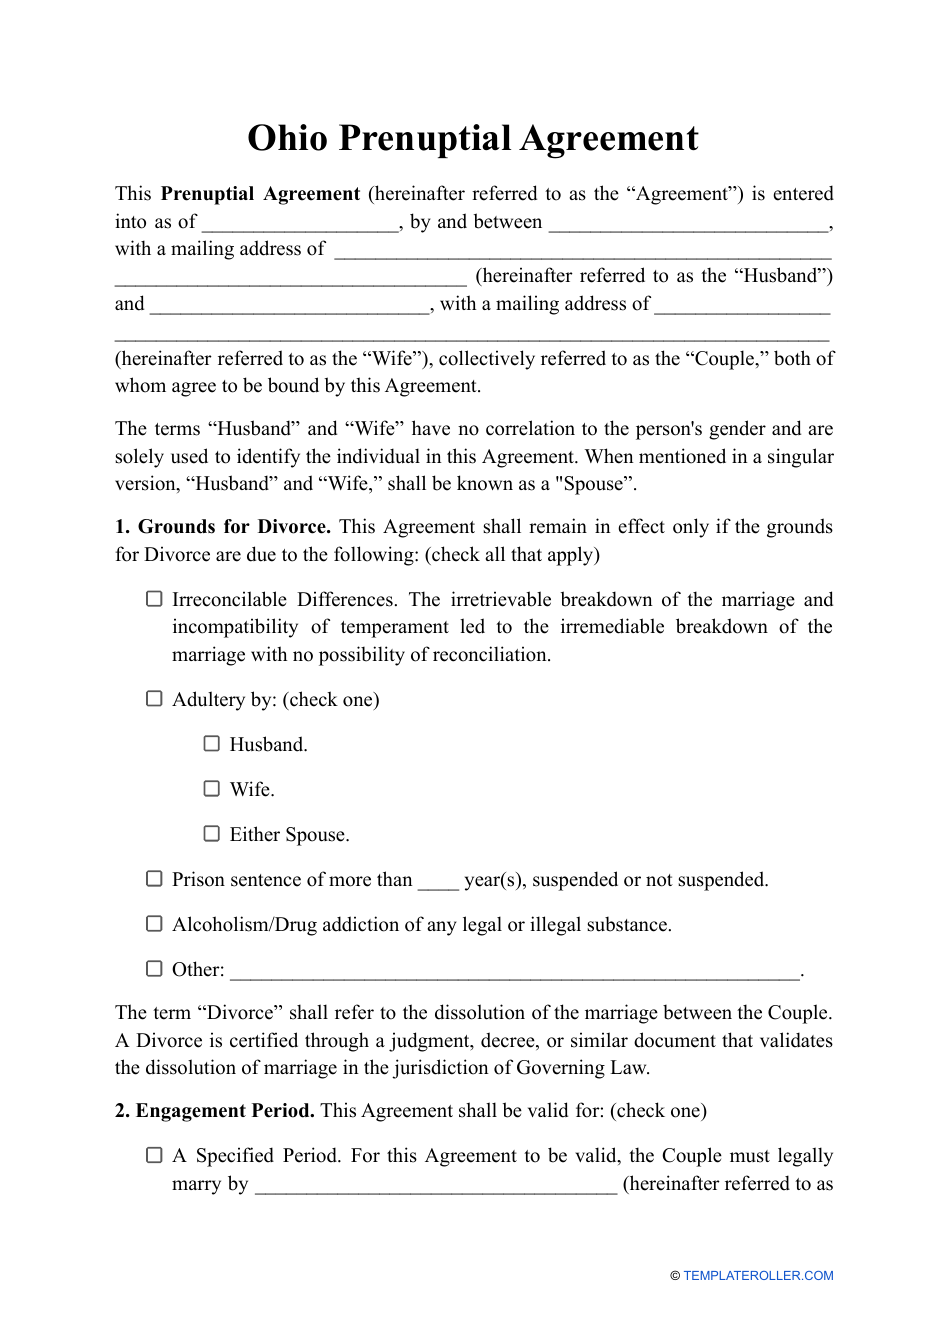 Prenuptial Agreement Template - Ohio, Page 1